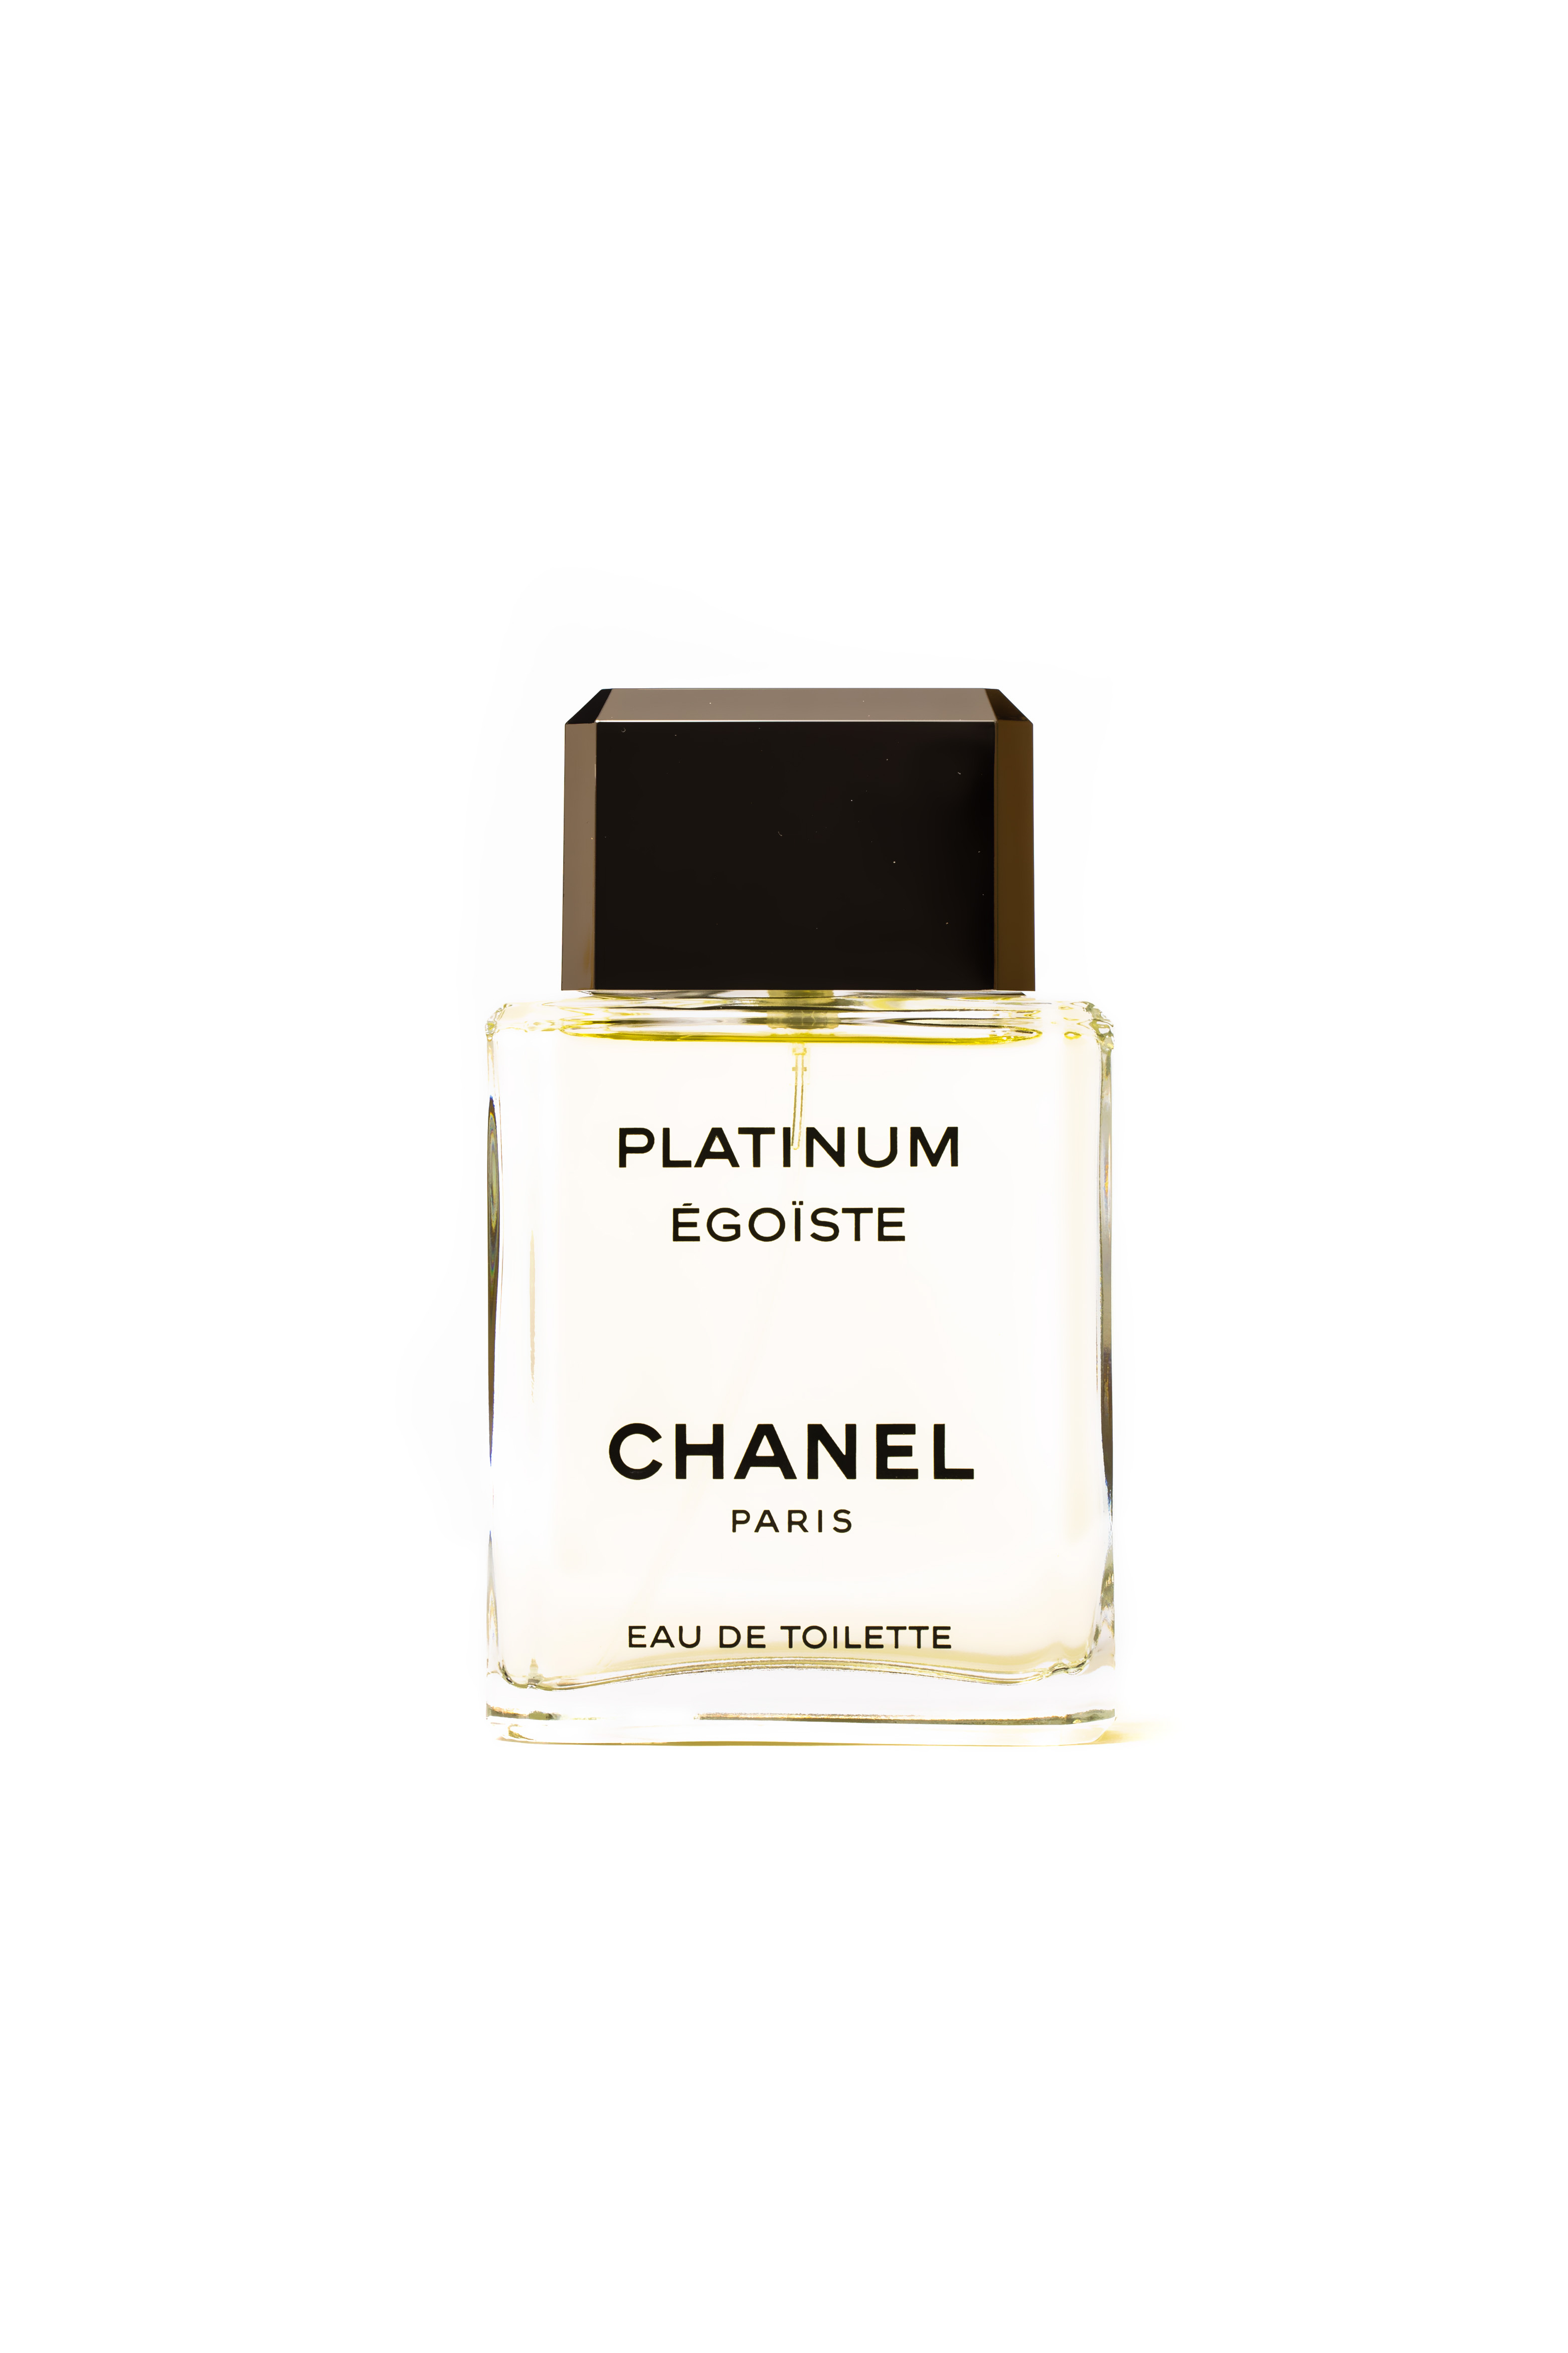 Chanel Egoiste Platinum Edt Spray 100 ml שאנל אגאויסט פלאטינום אדט 100מל